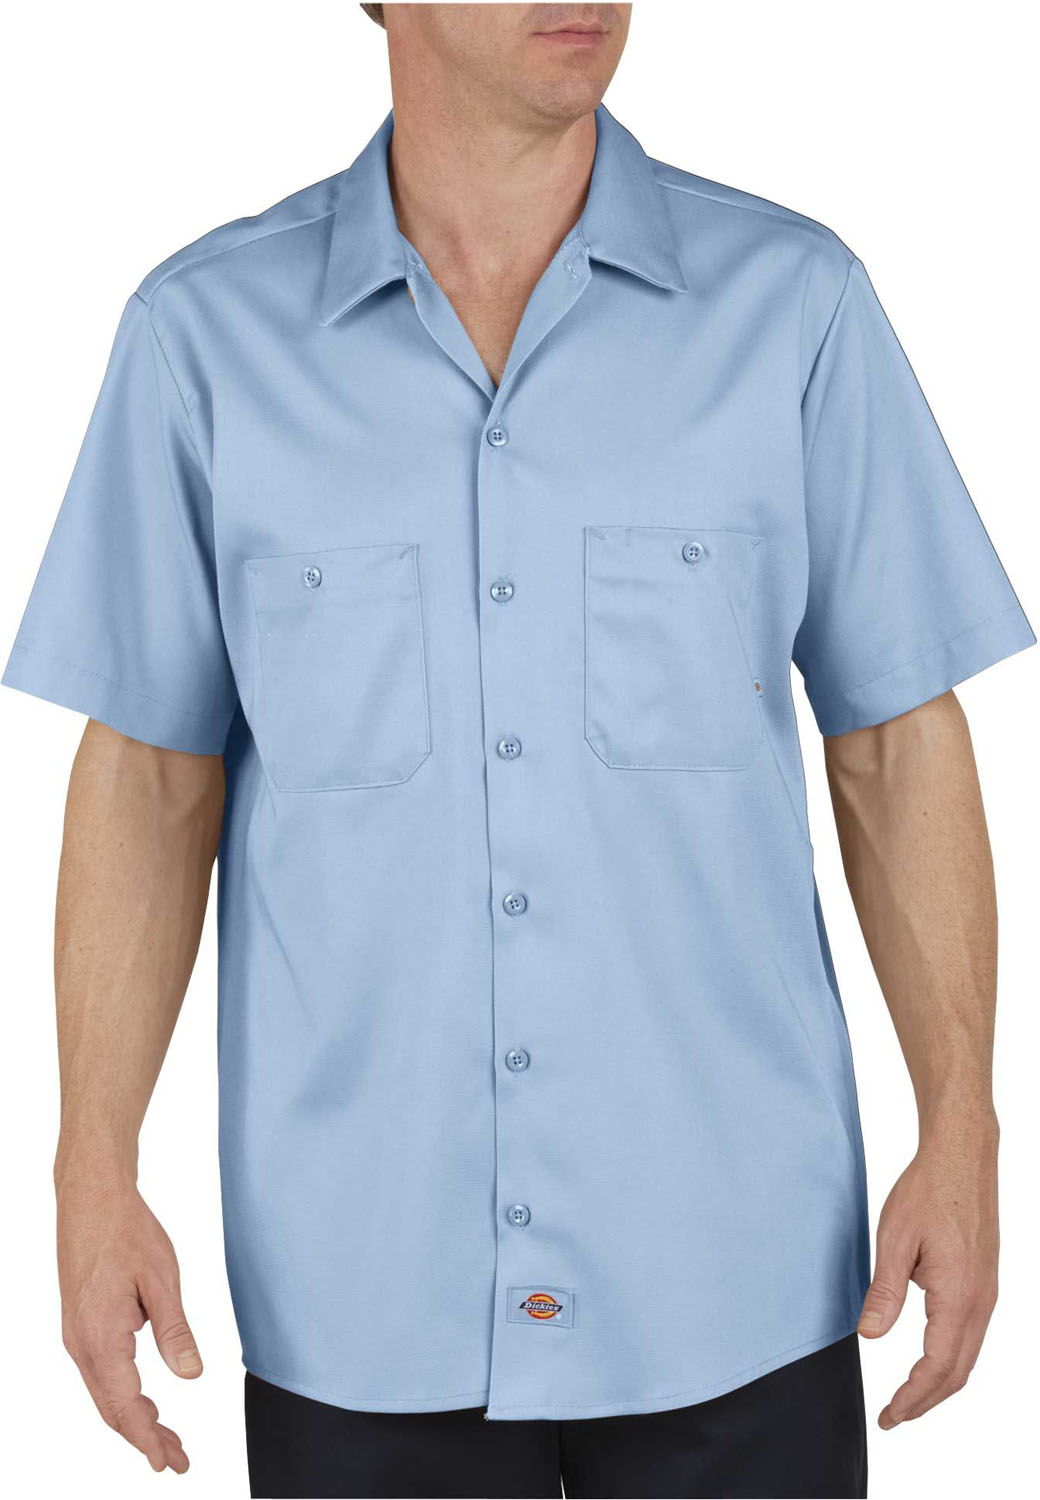 LS307 Dickies Industrial Short Sleeve Cotton Work Shirt